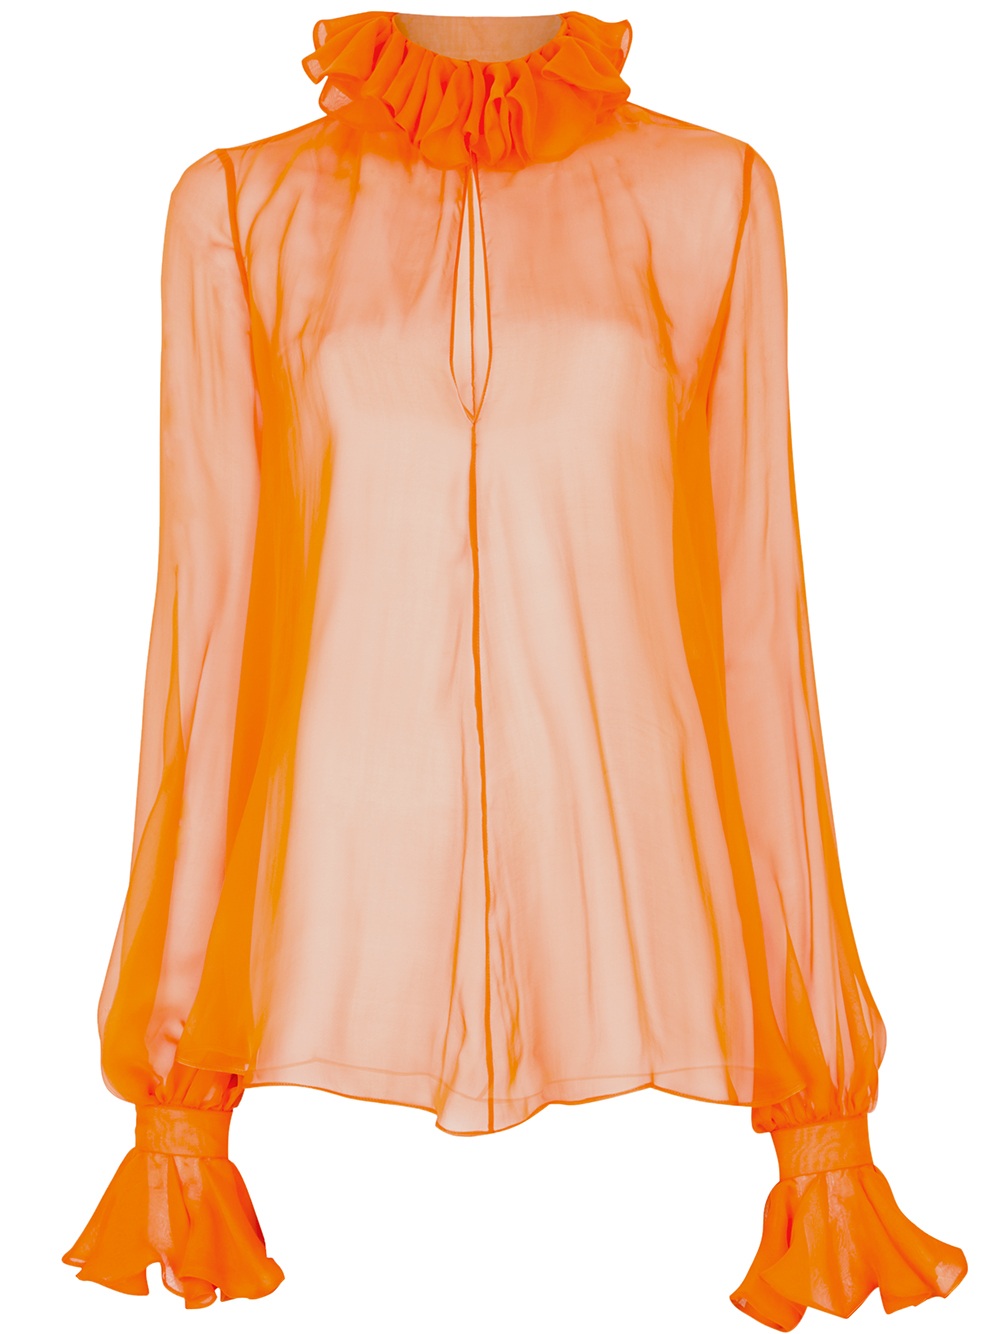 Alexander McQueen Ruffle Collar Blouse in Orange - Lyst